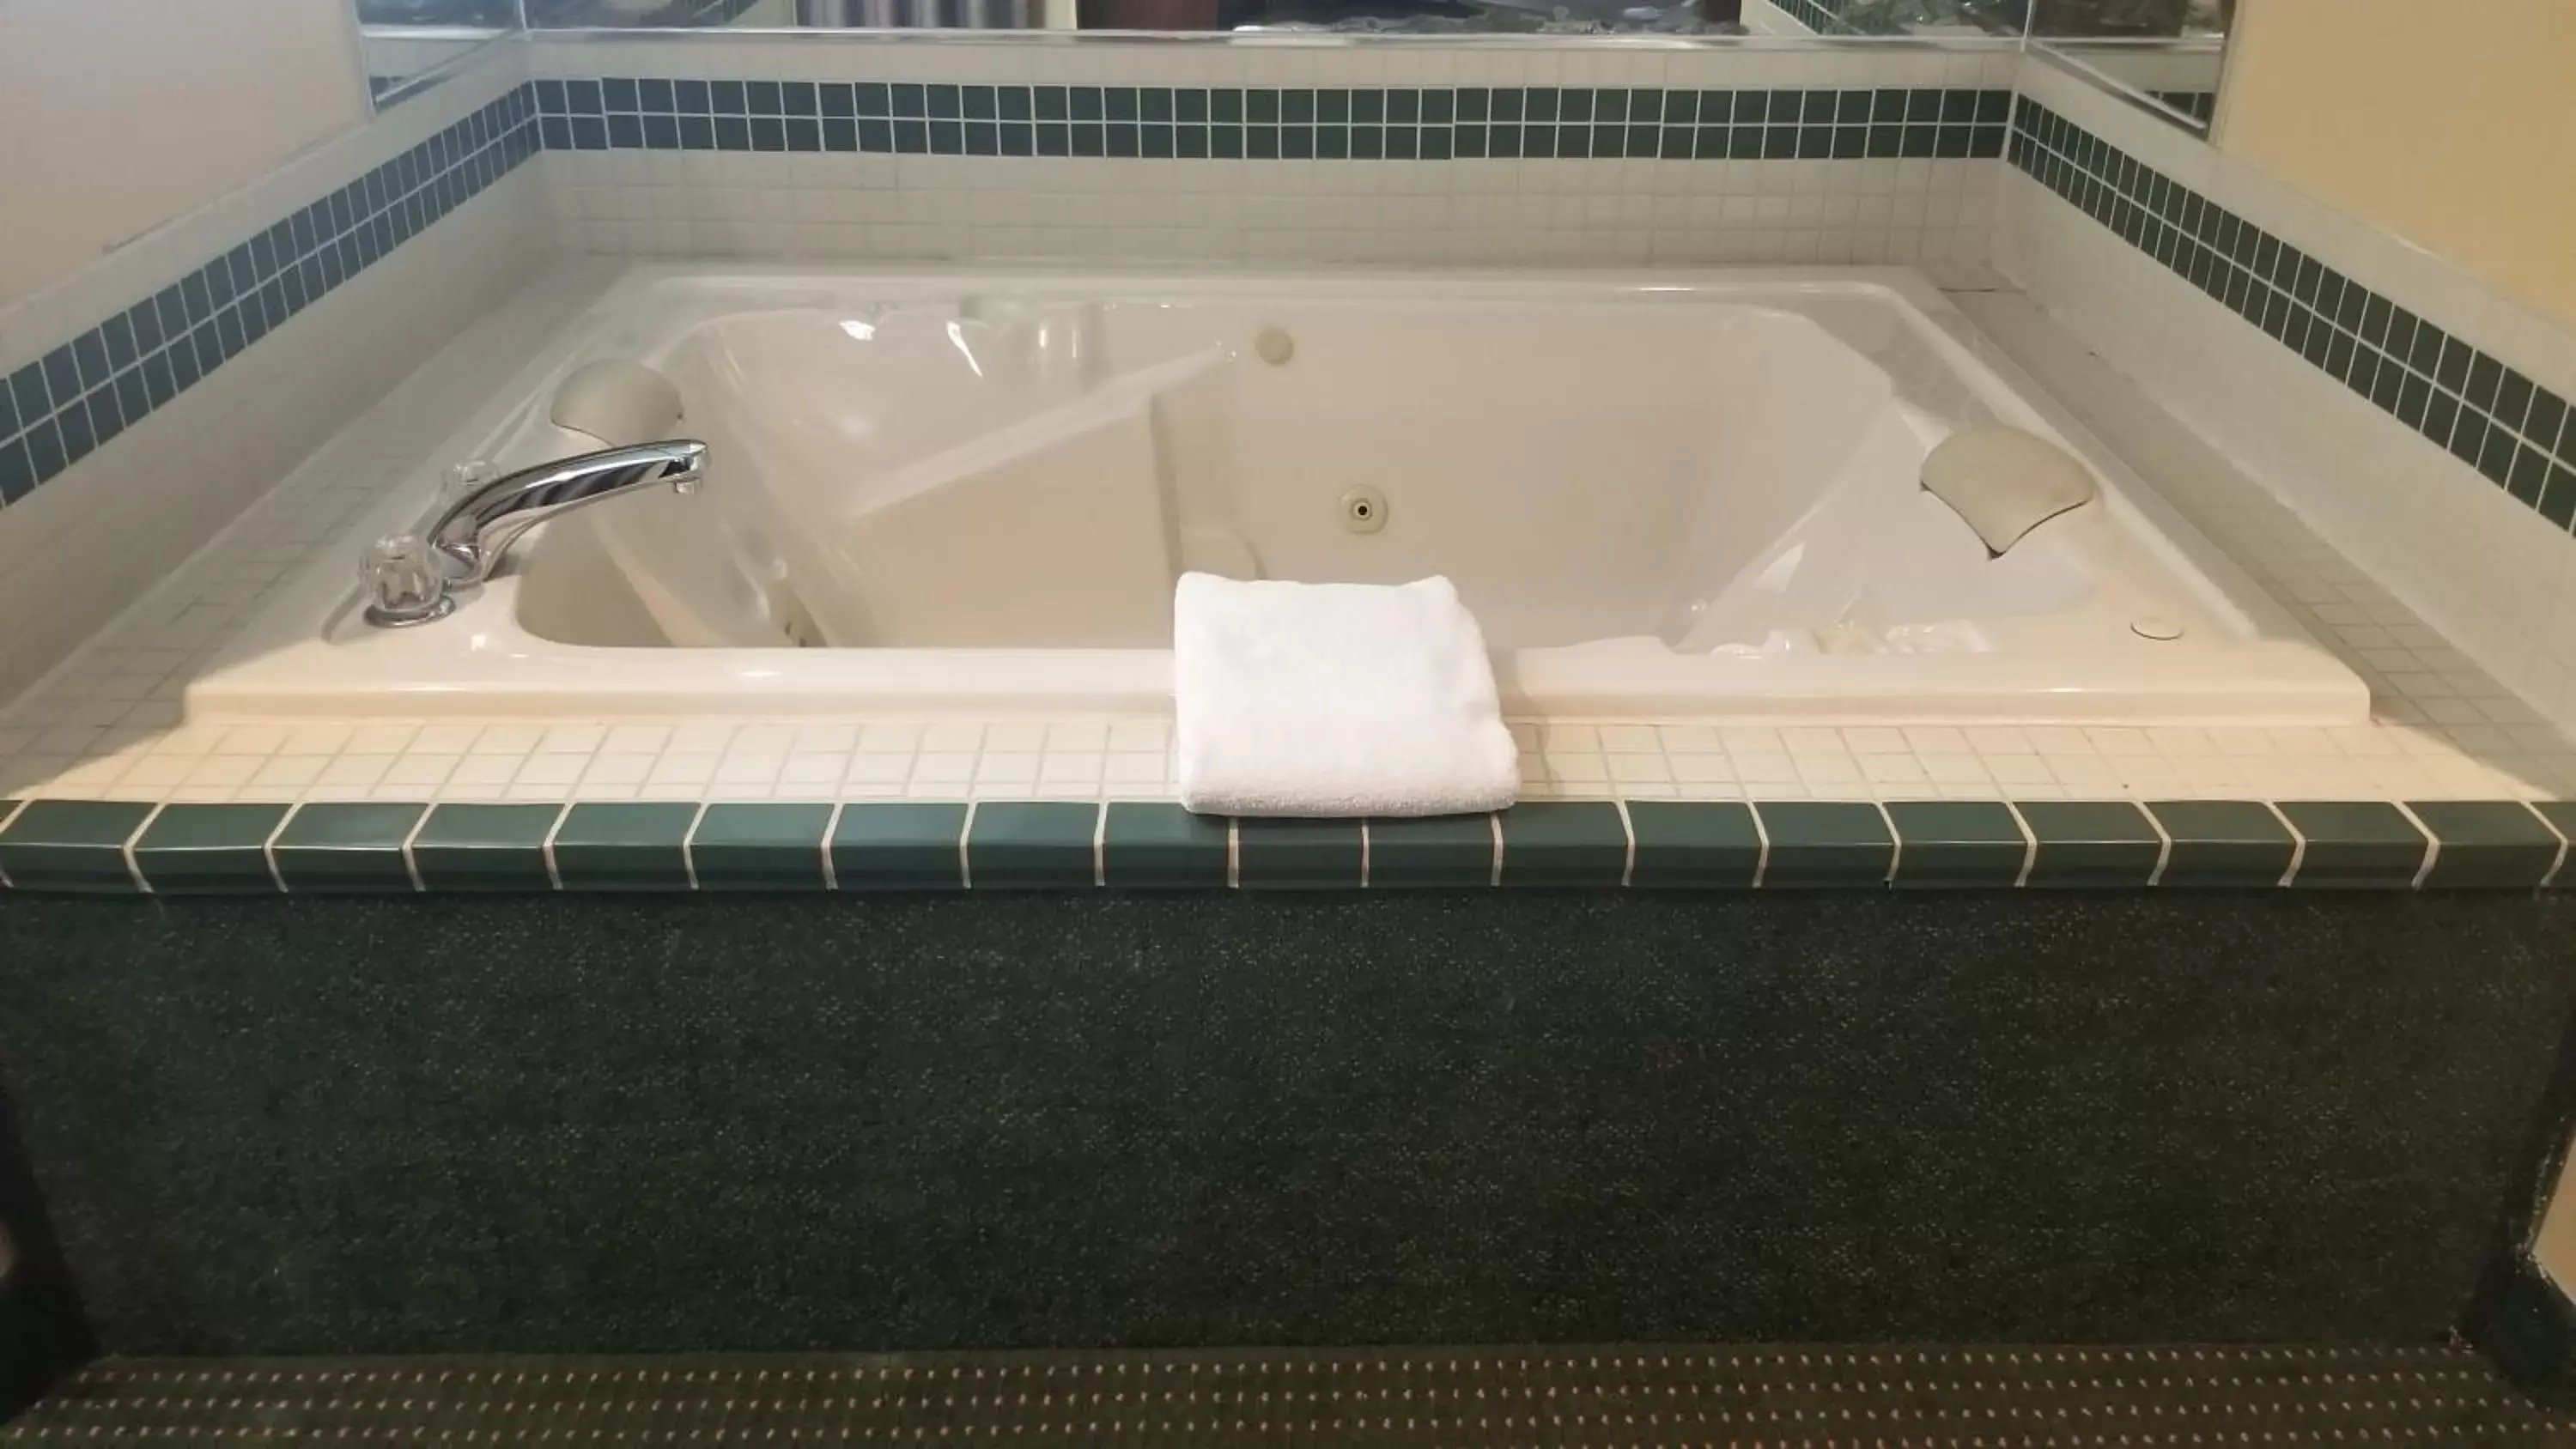 Hot Tub in College Inn